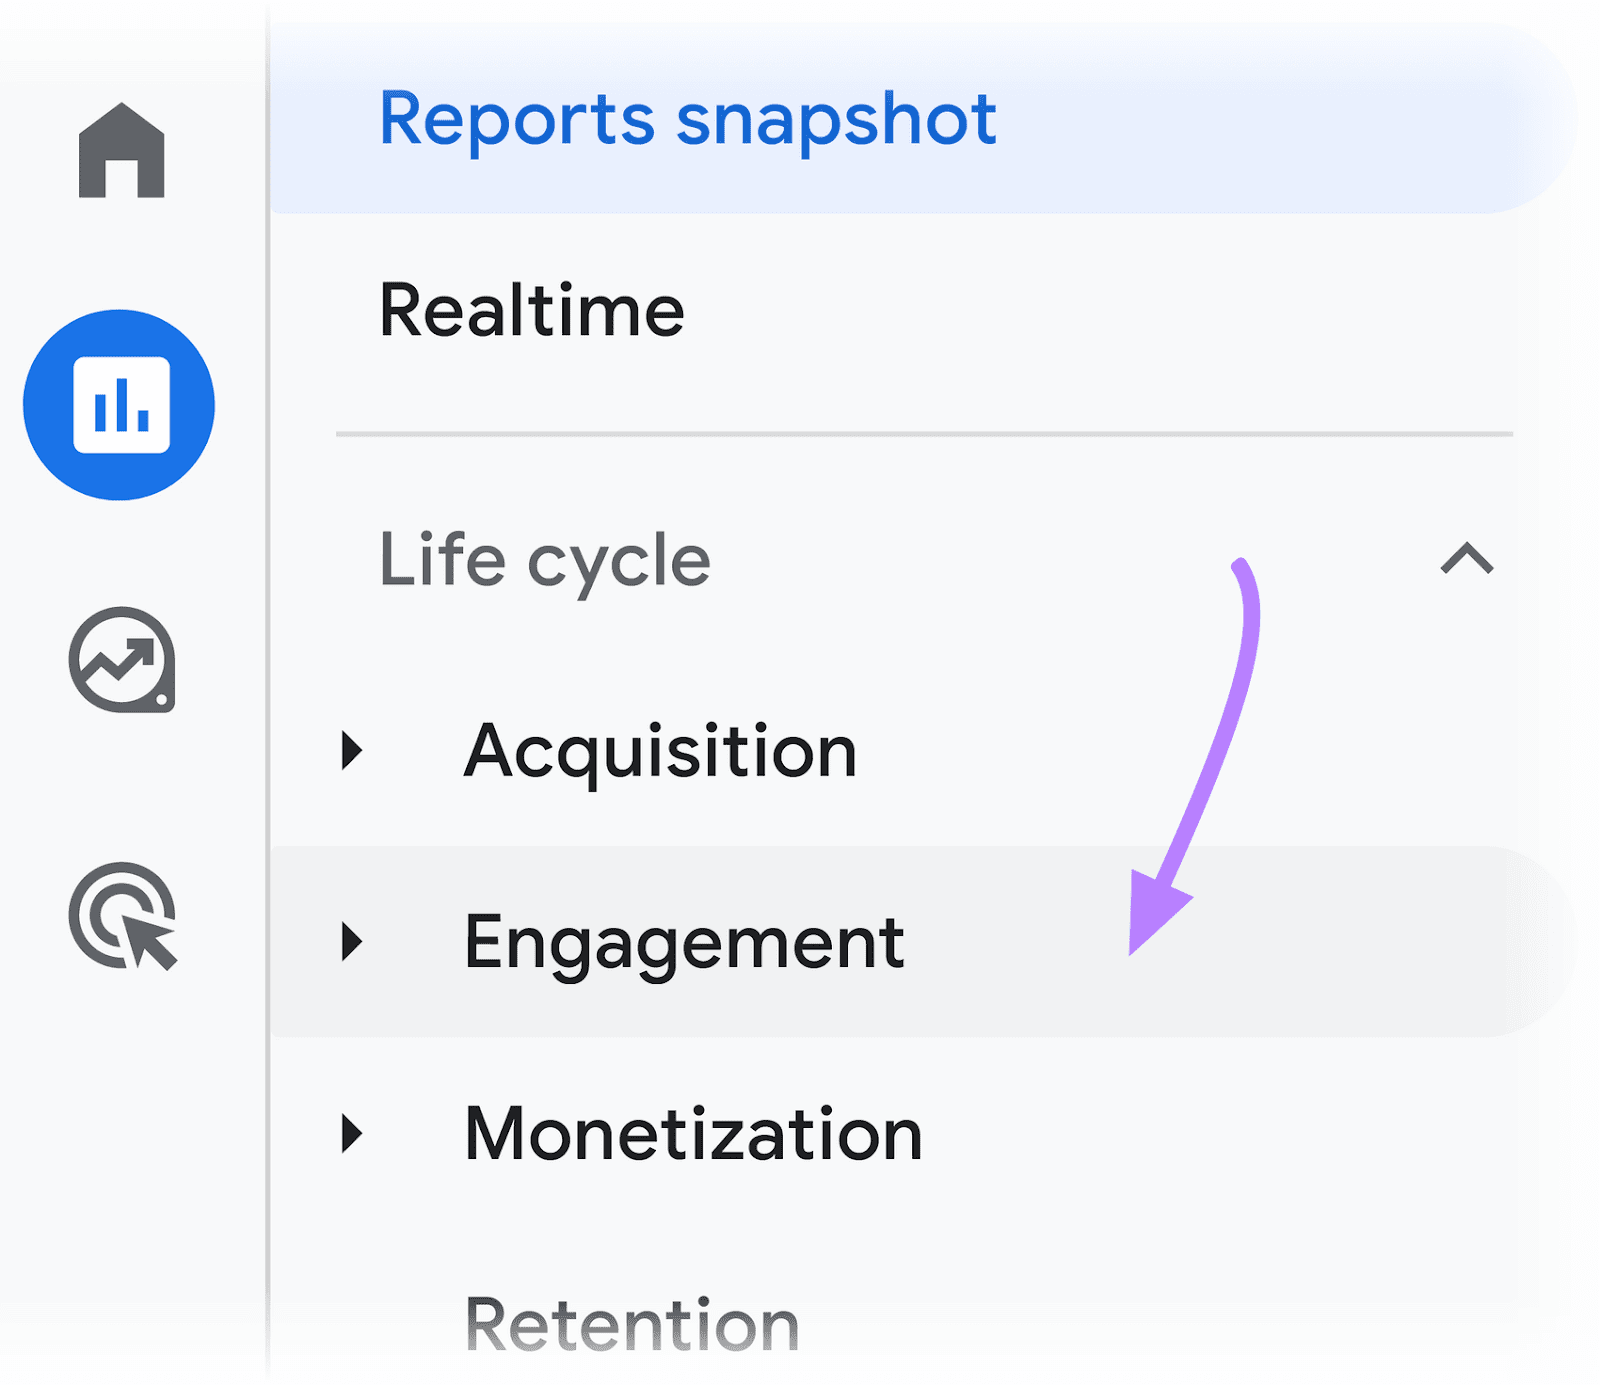 “Engagement" selected under "Life cycle" menu